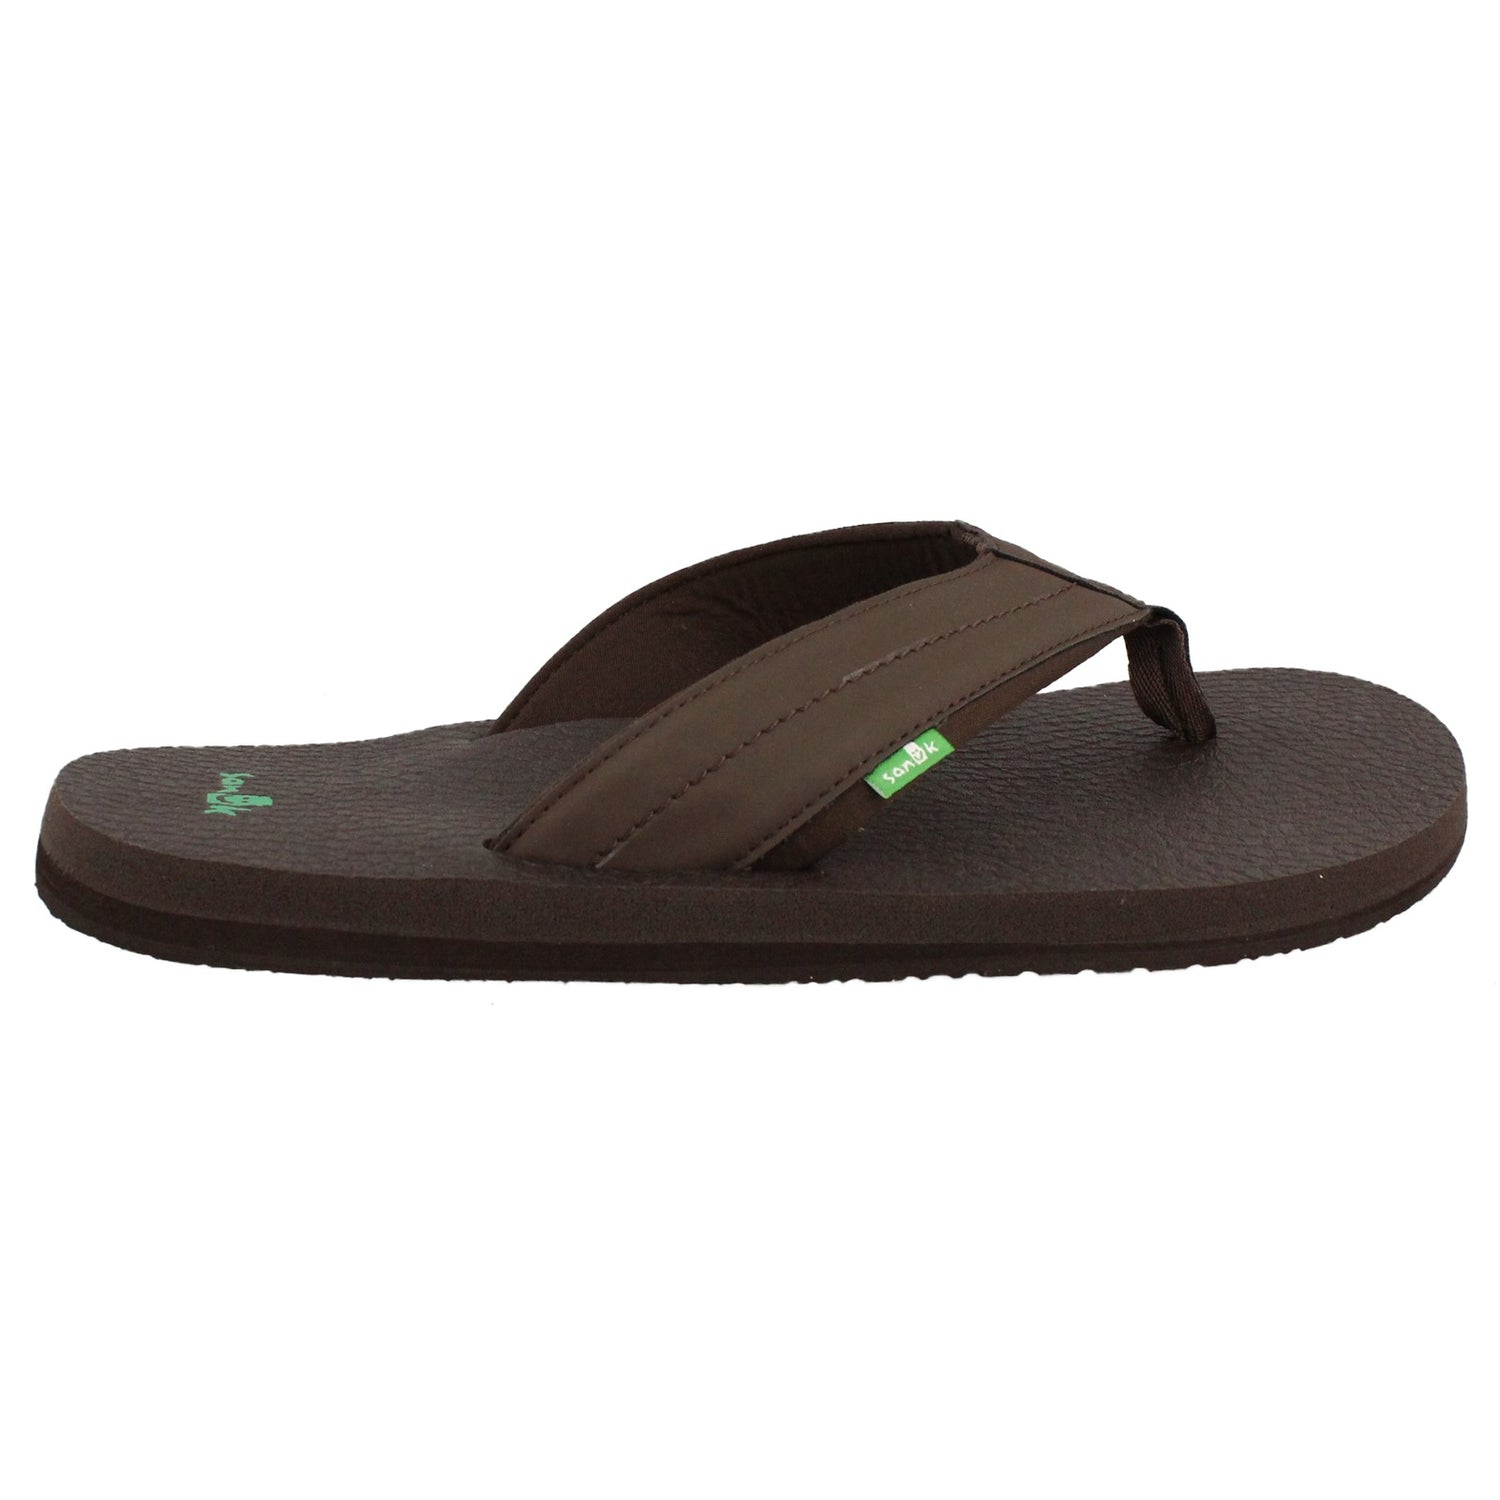 SANUK Flip Flops Men's Size 10 US Brown Logo Sandals Cushioned